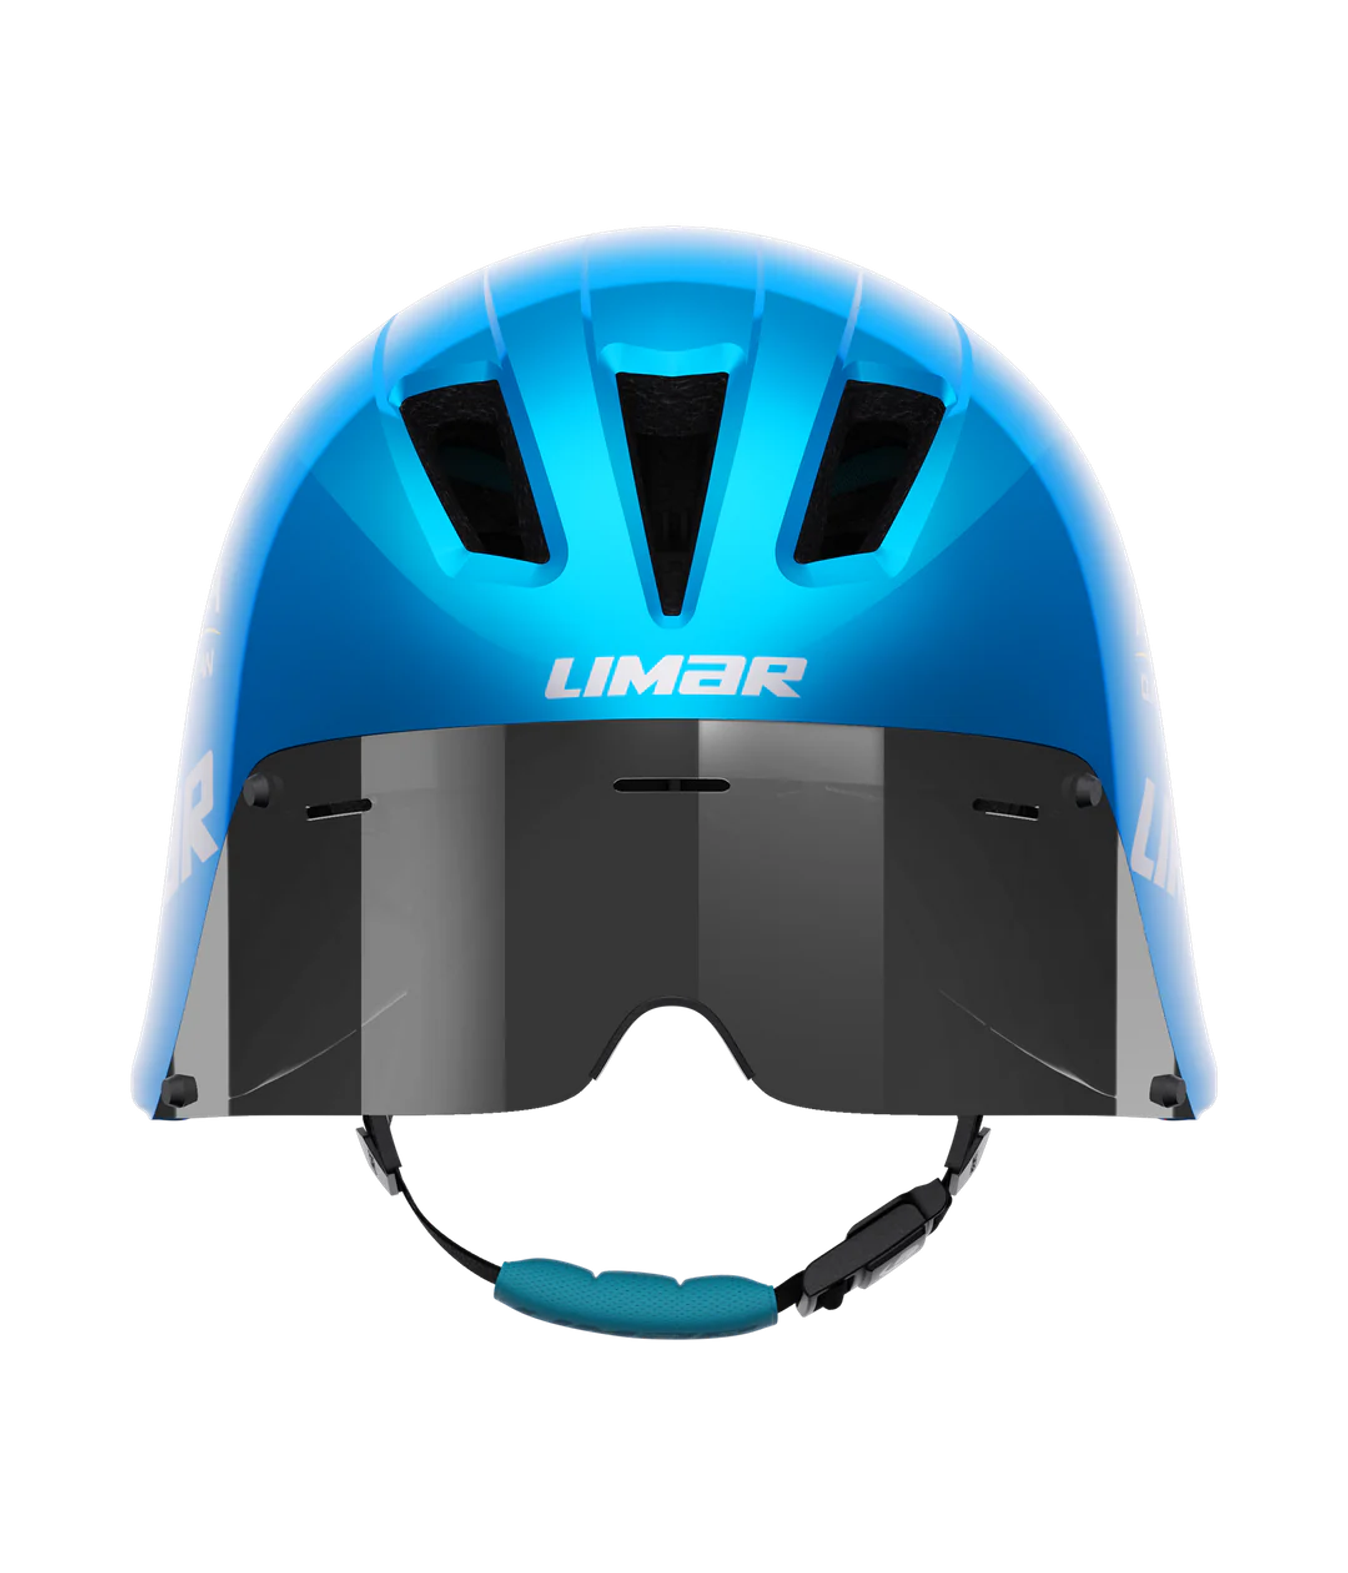 The new Limar Alien time trial helmet